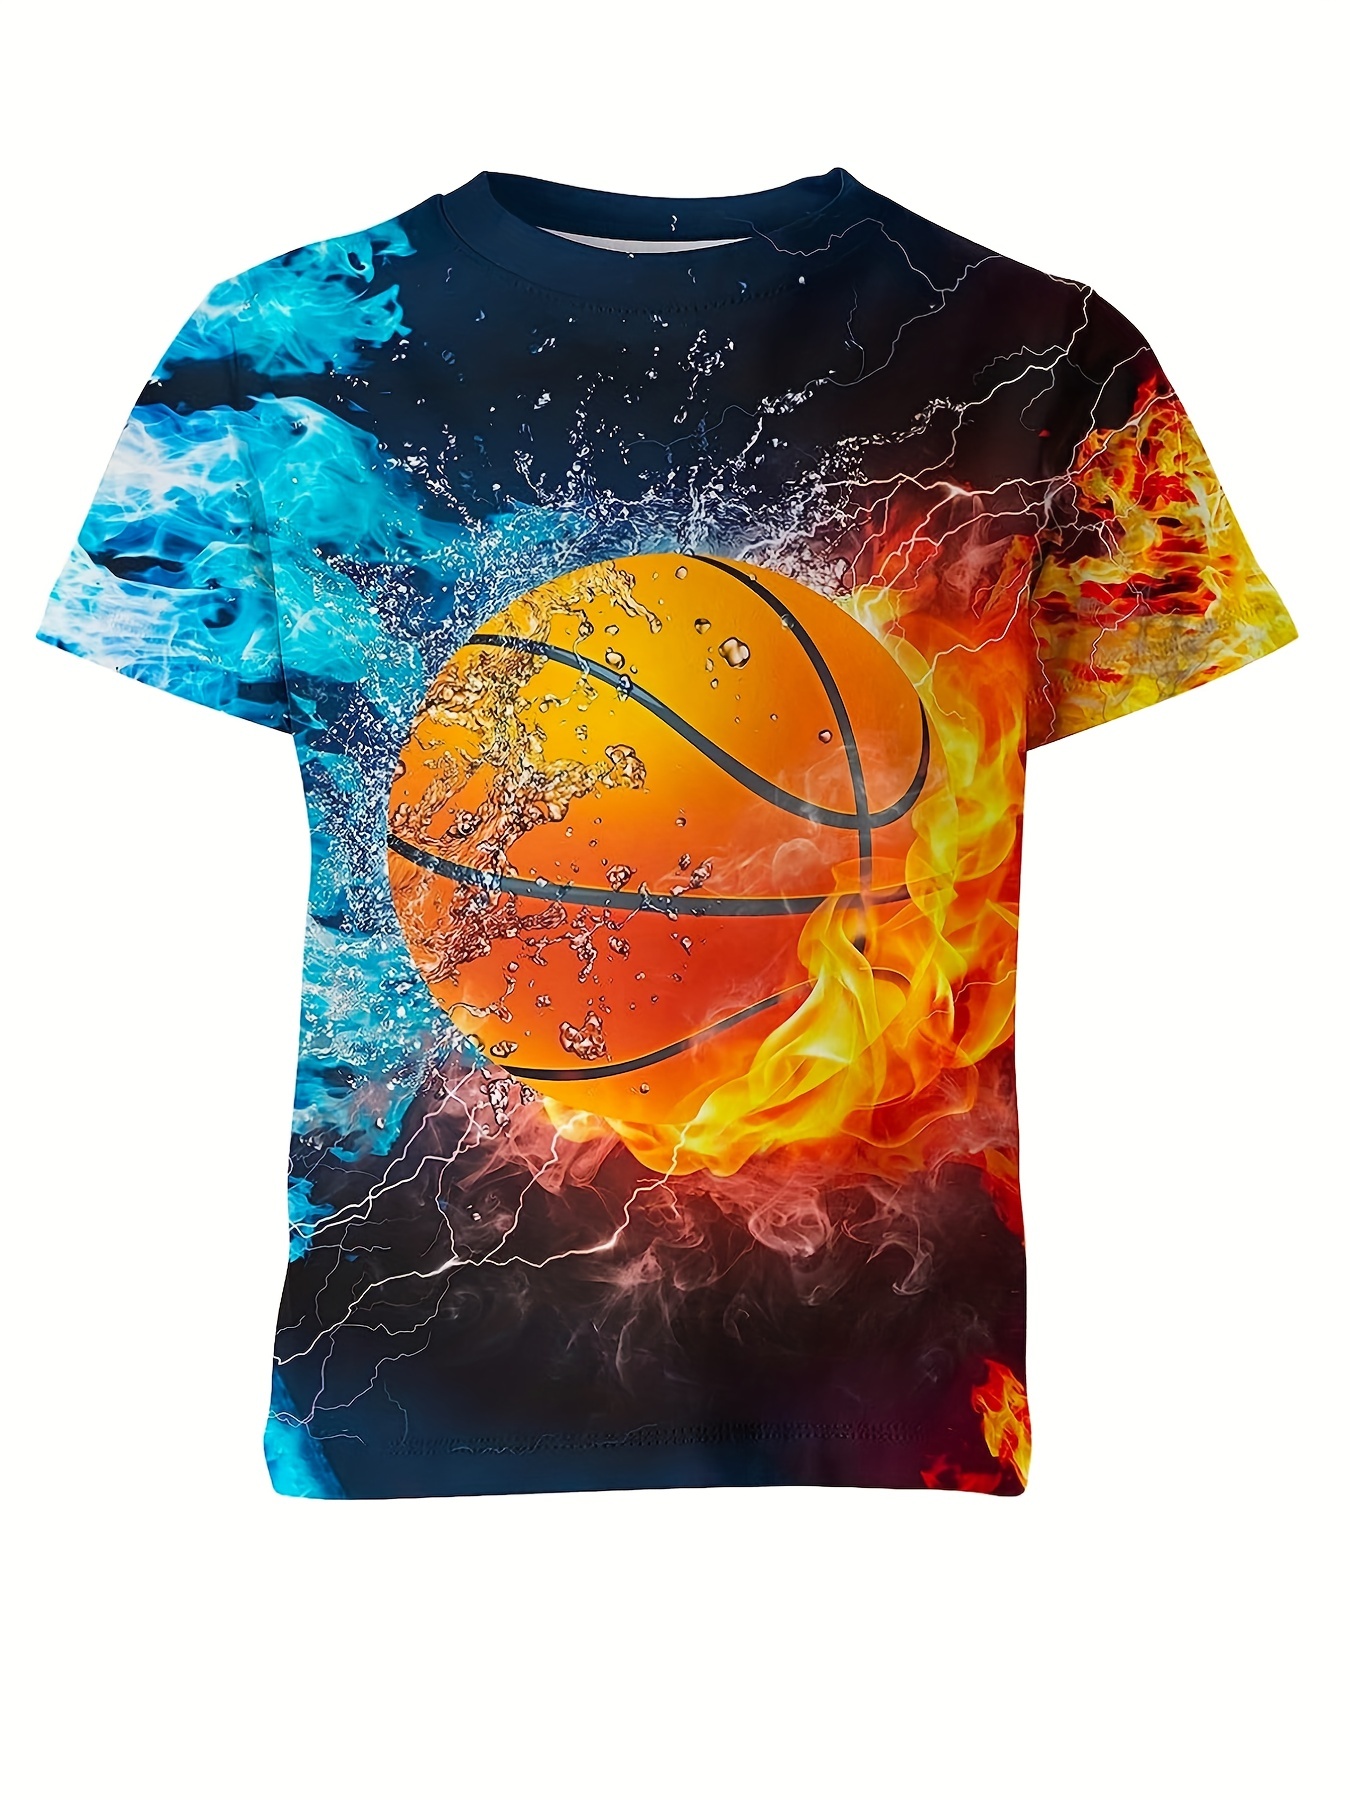 Kobe Bryant summer flame T-shirt 3D printed short sleeved T-shirt